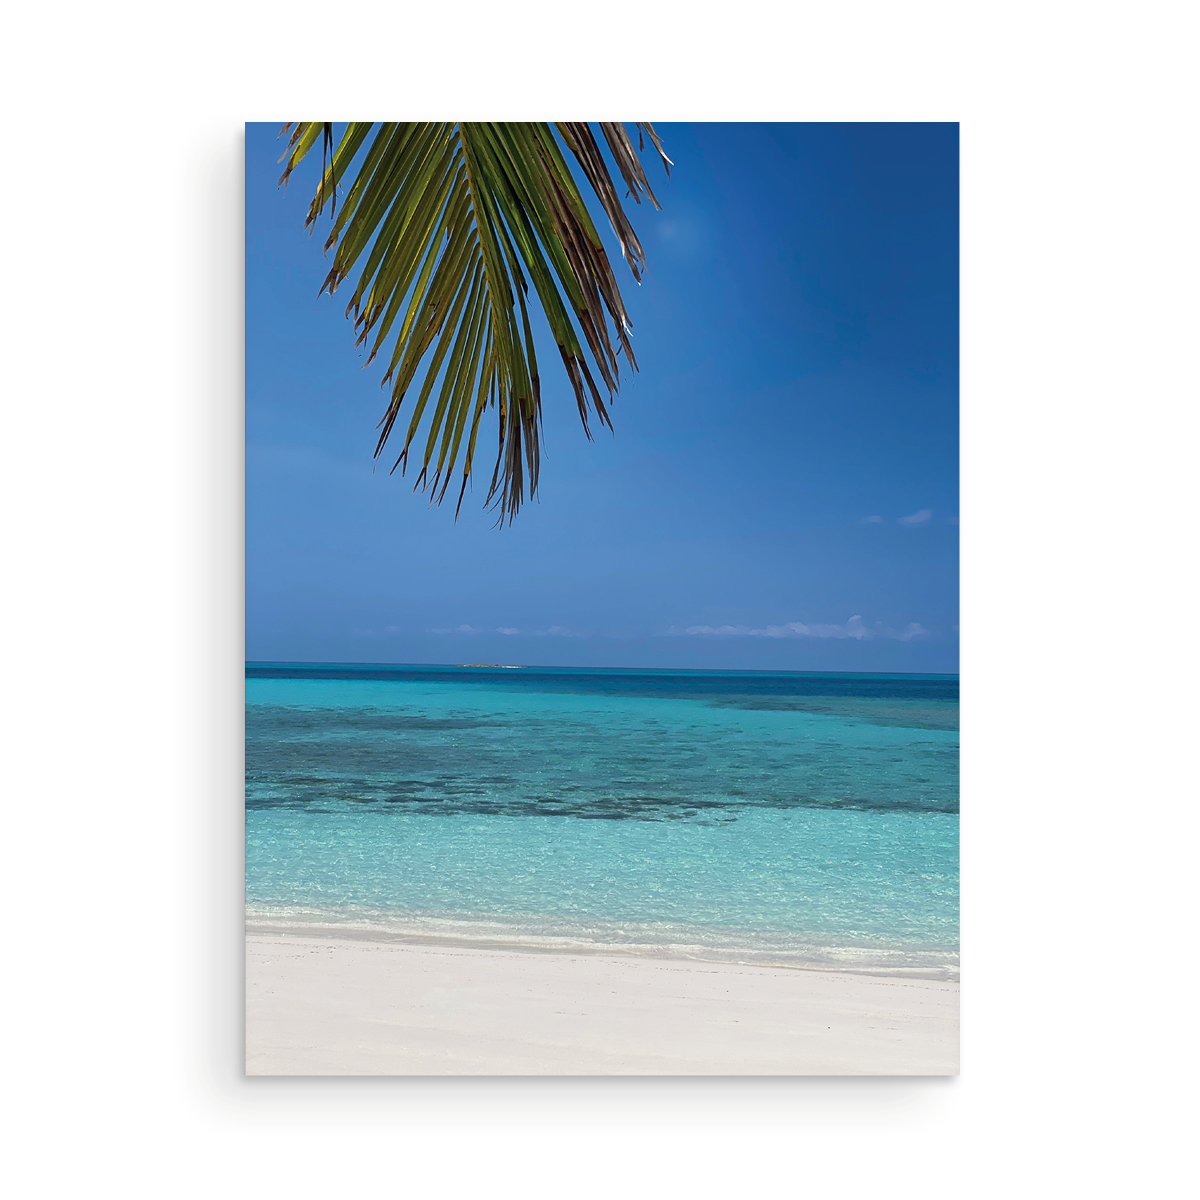 Bahamian Card Collection